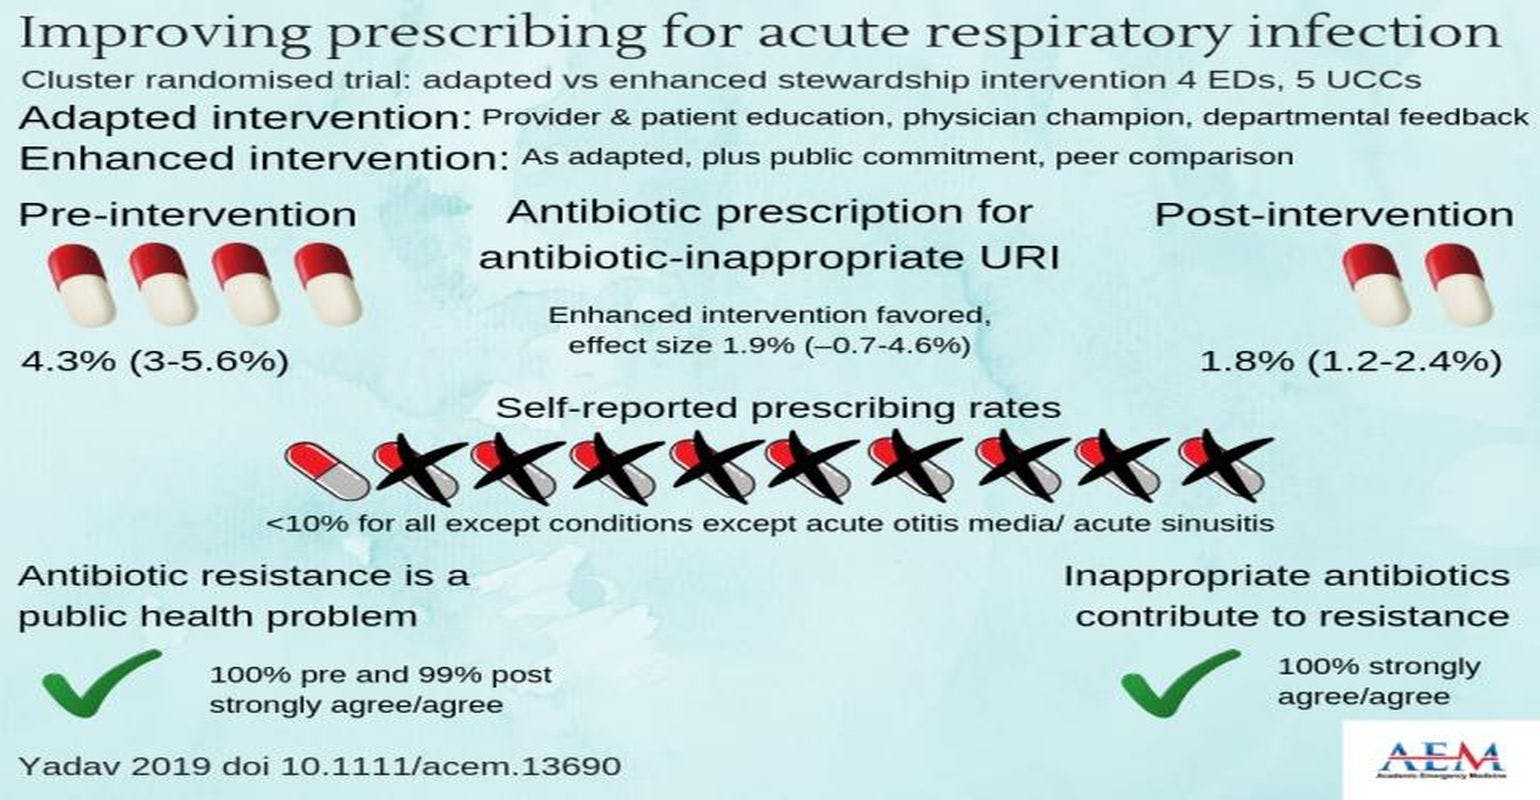 Antibiotic Stewardship Intervention Improves Prescribing for Acute Respiratory Infection